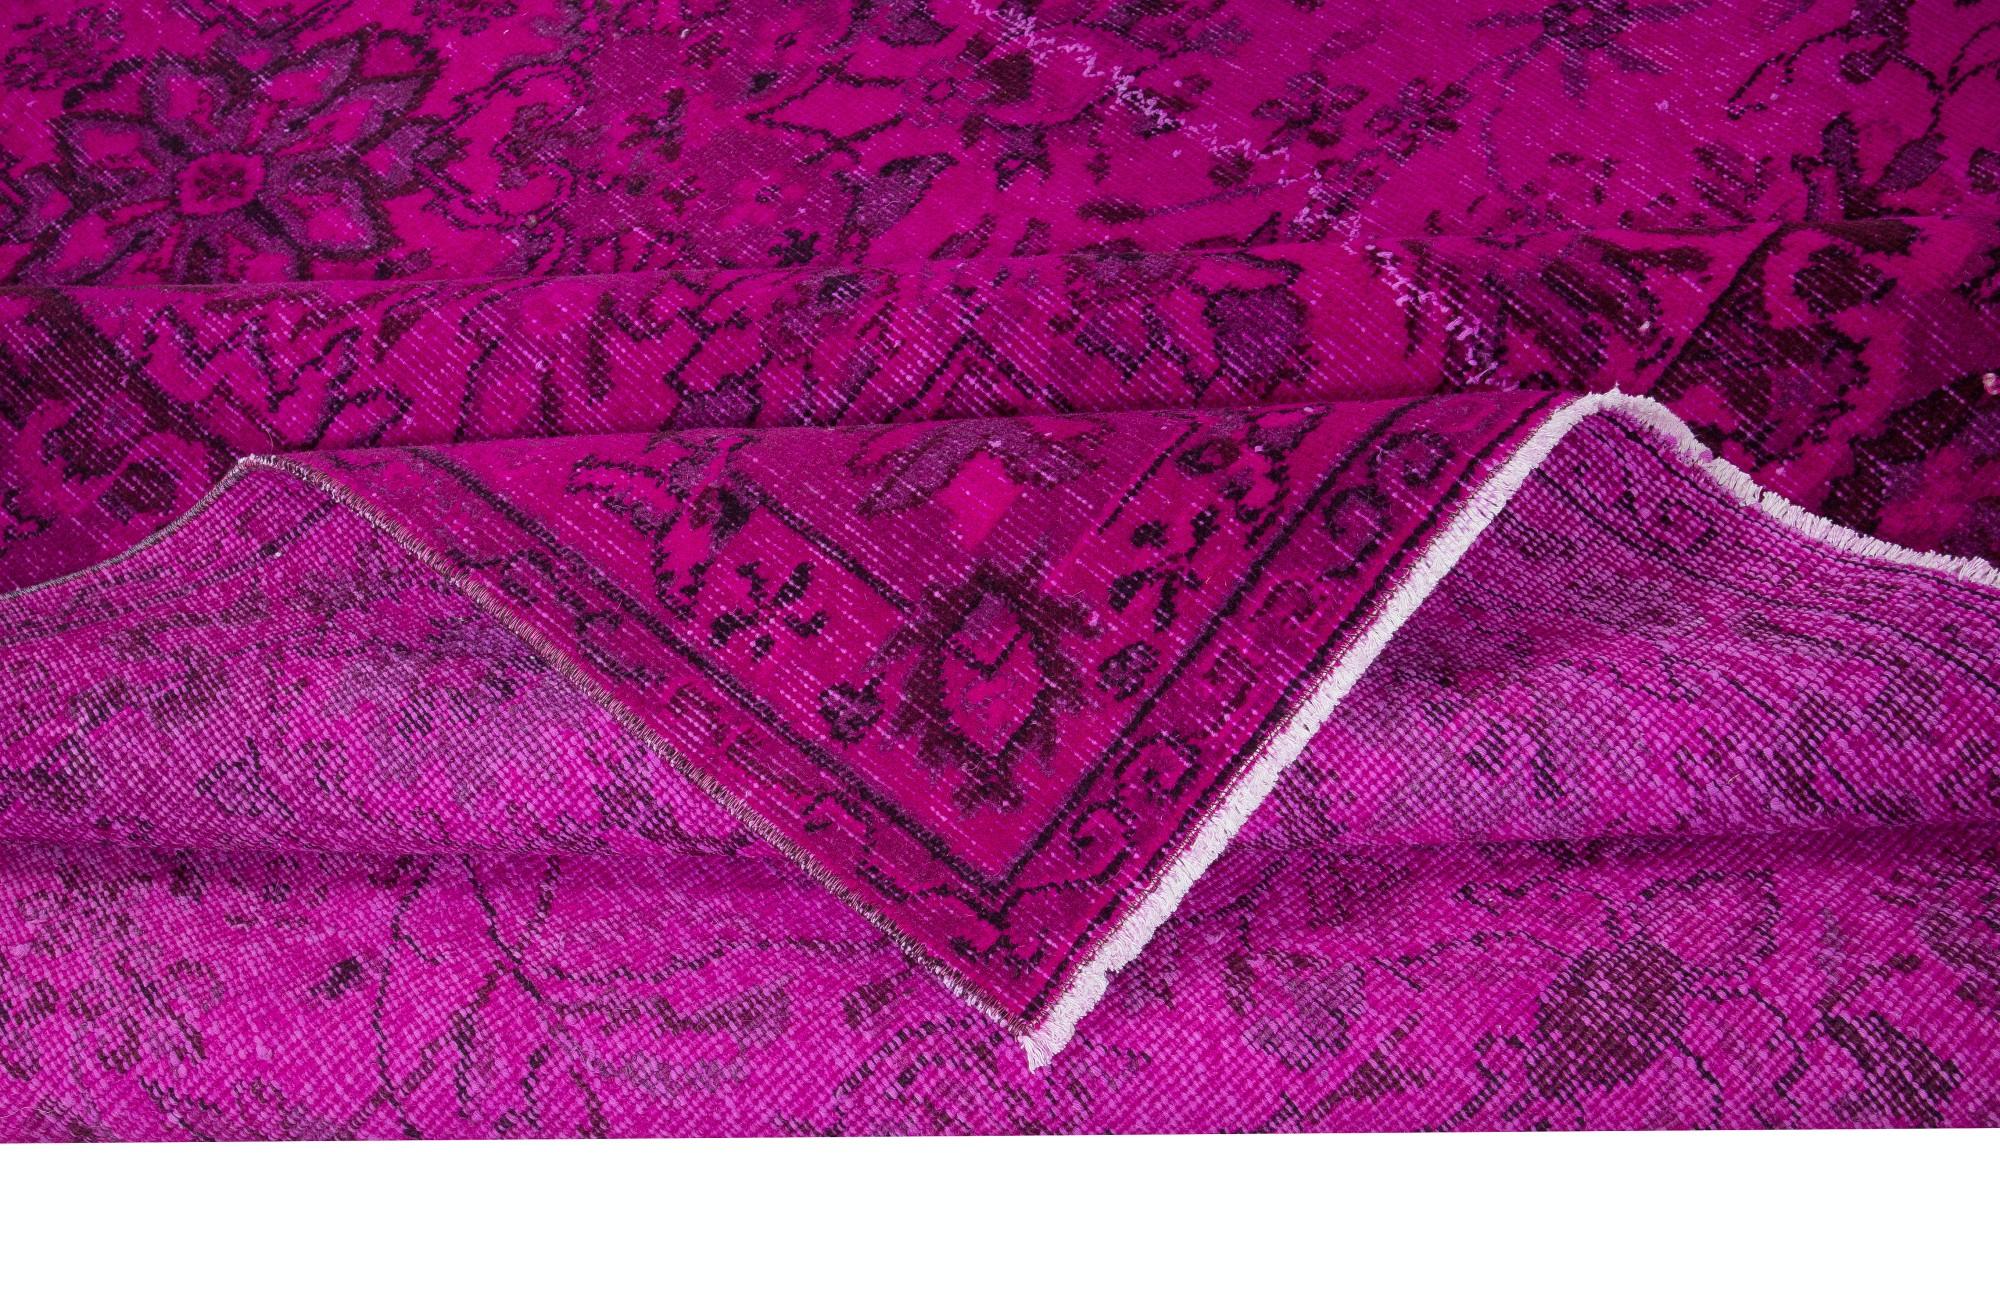 Turc 7.2x10.5 Ft One of a Kind Hand Made Modern Modernity Large Rug in Hot Pink (Tapis turc de grande taille en rose vif) en vente